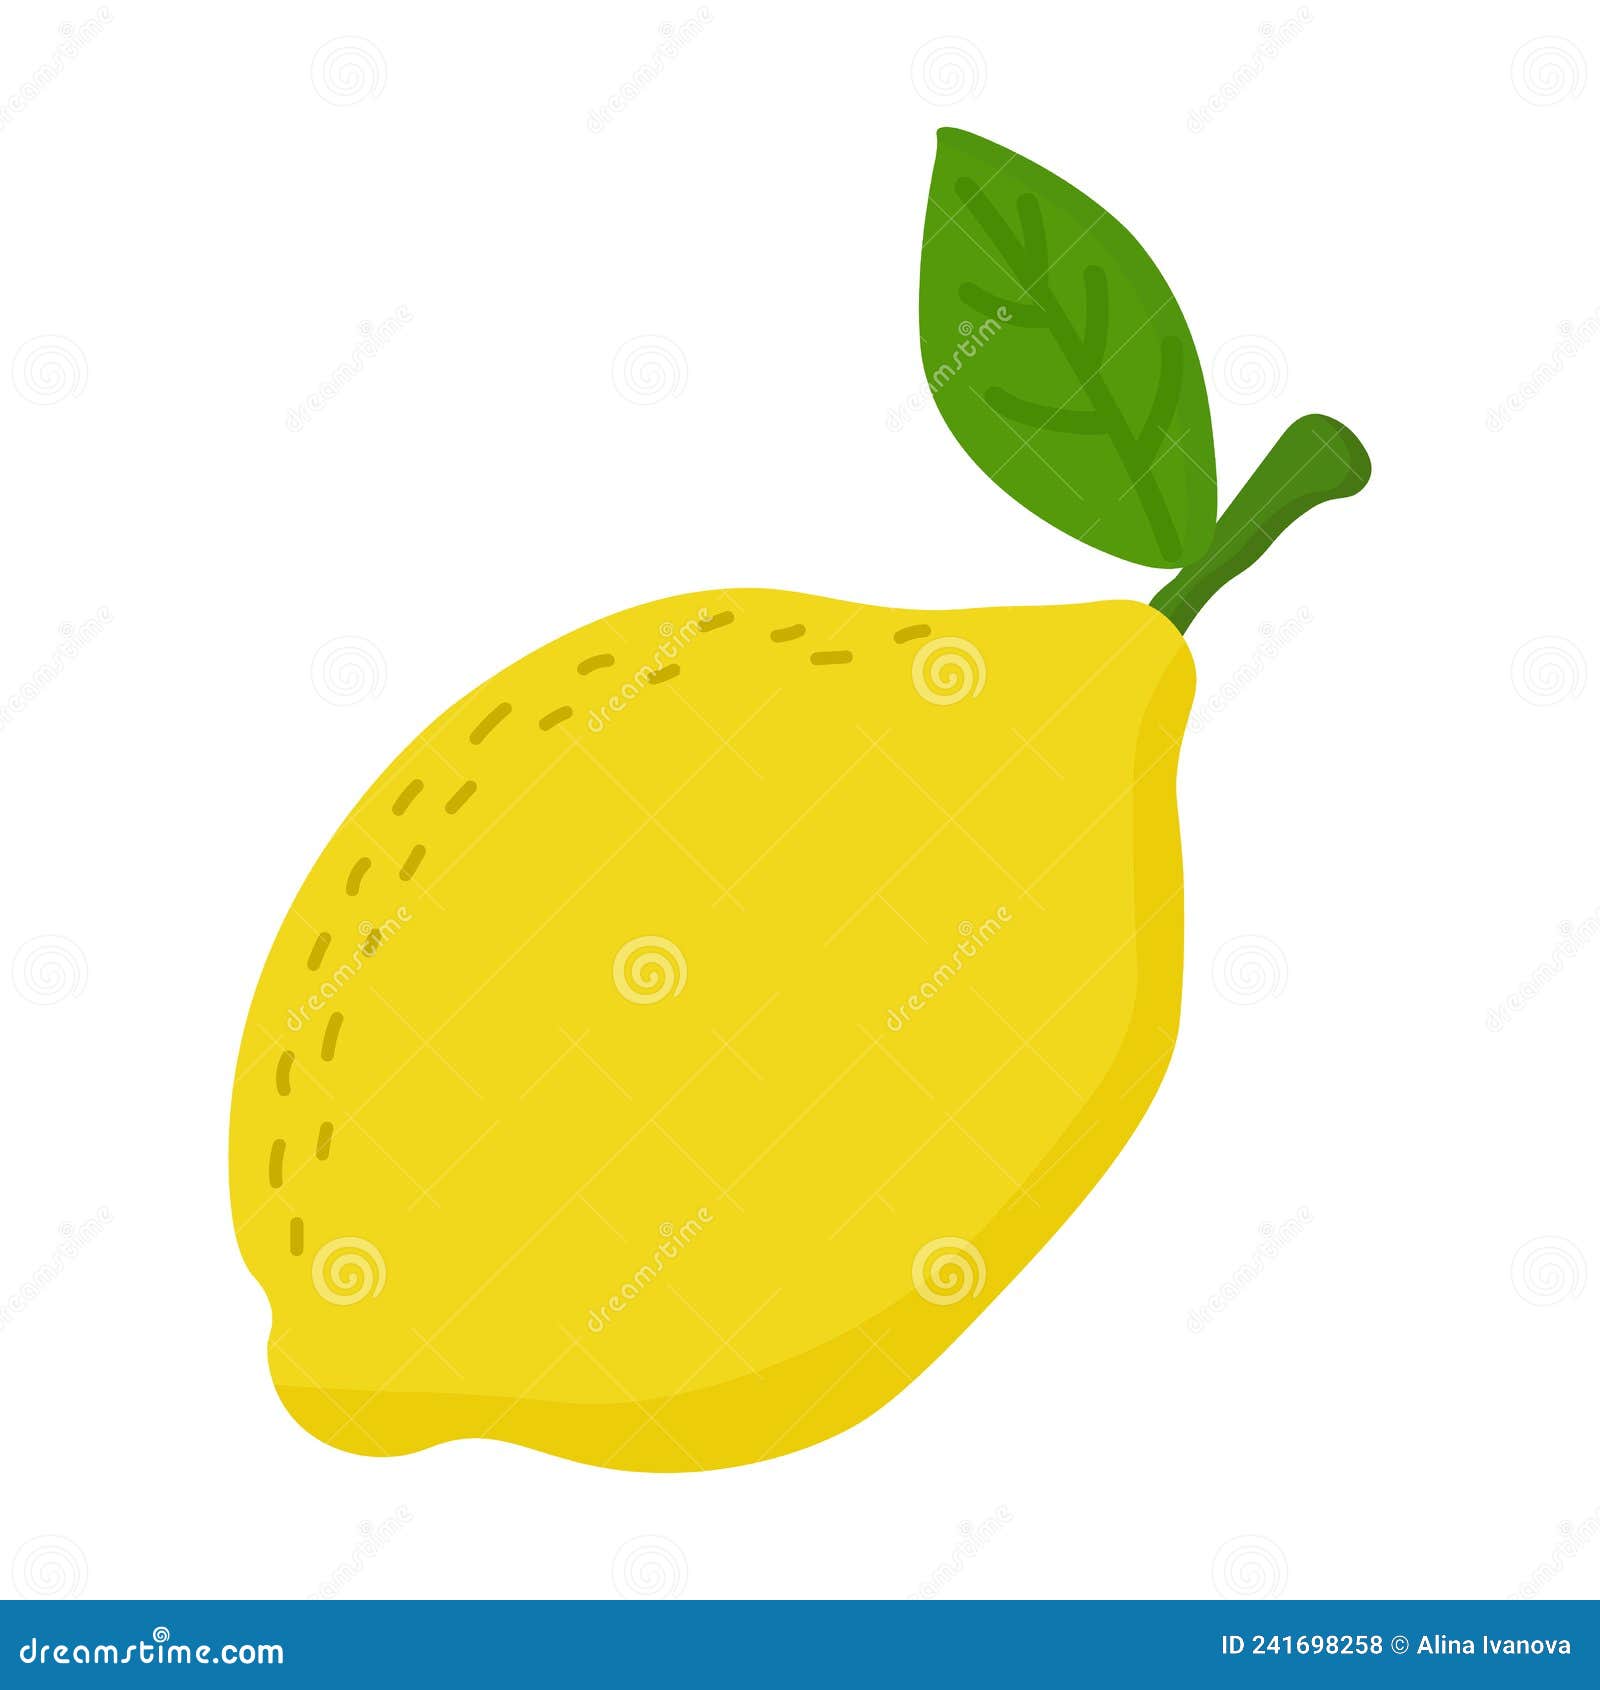 Cartoon Lemon Isolated on White Background. Flat Cartoon Vector ...